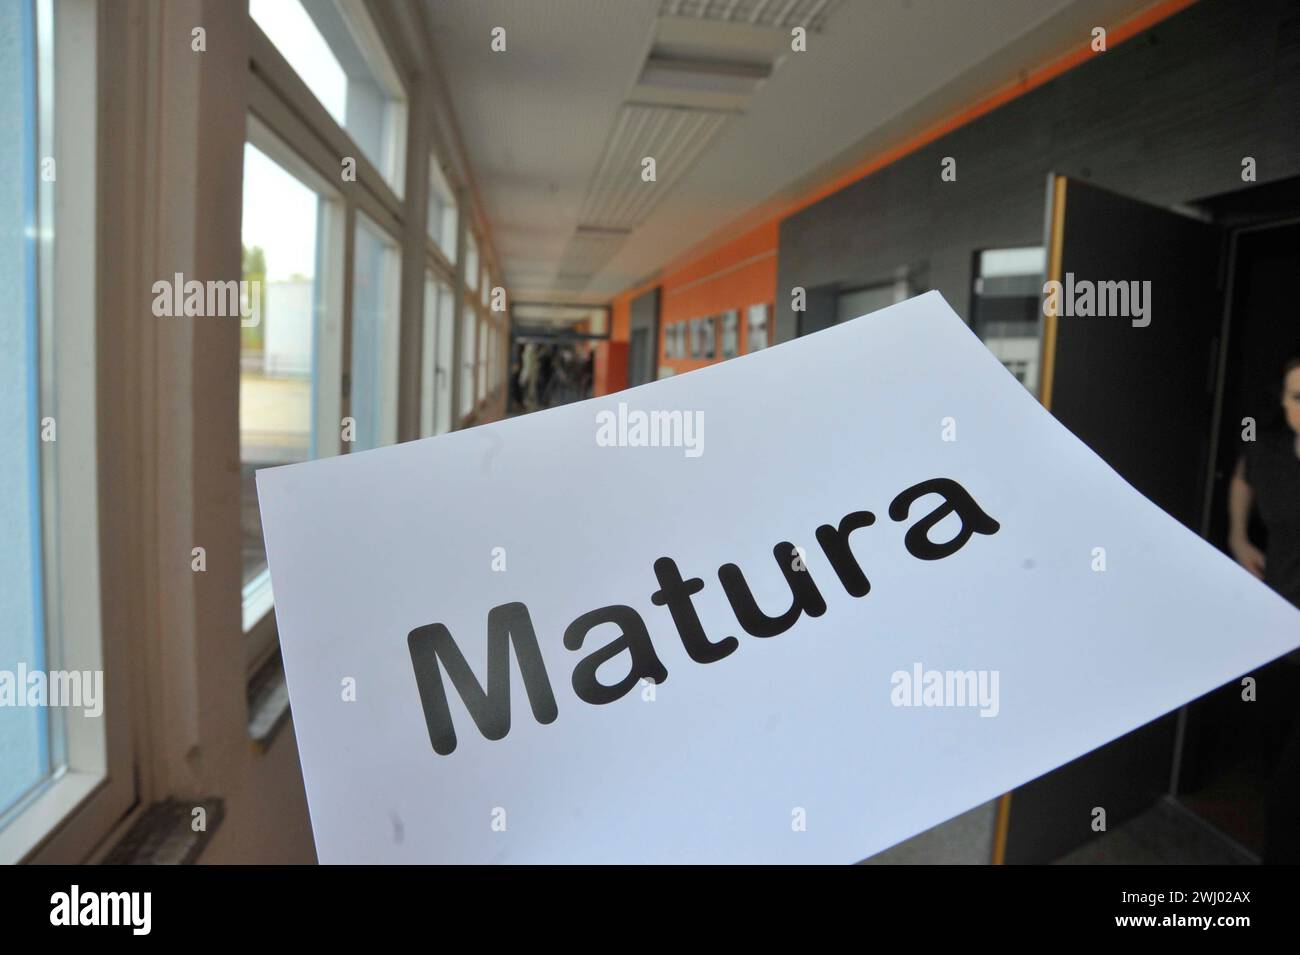 Matura or maturity test at school Stock Photo